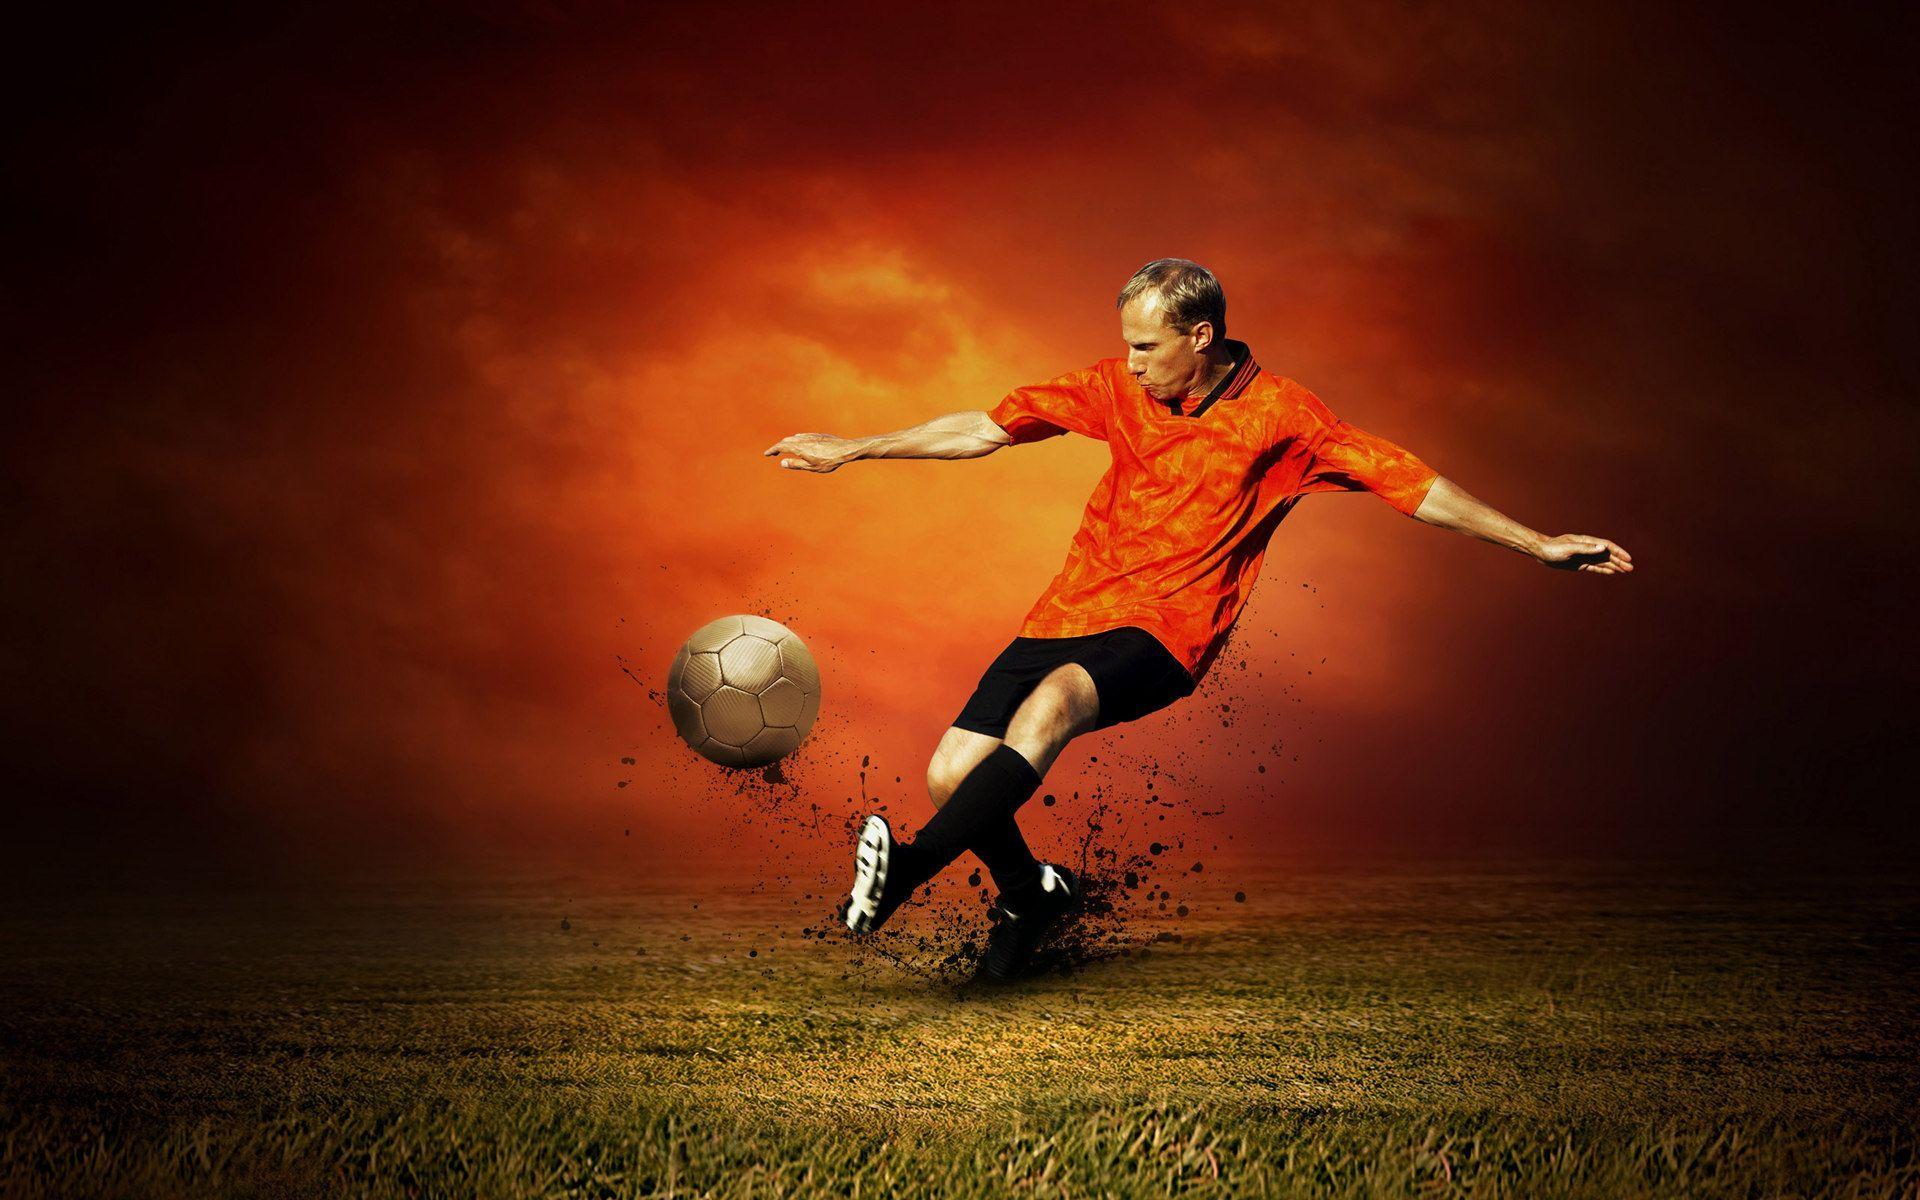 Soccer Desktop Wallpaper. Soccer Picture, Image